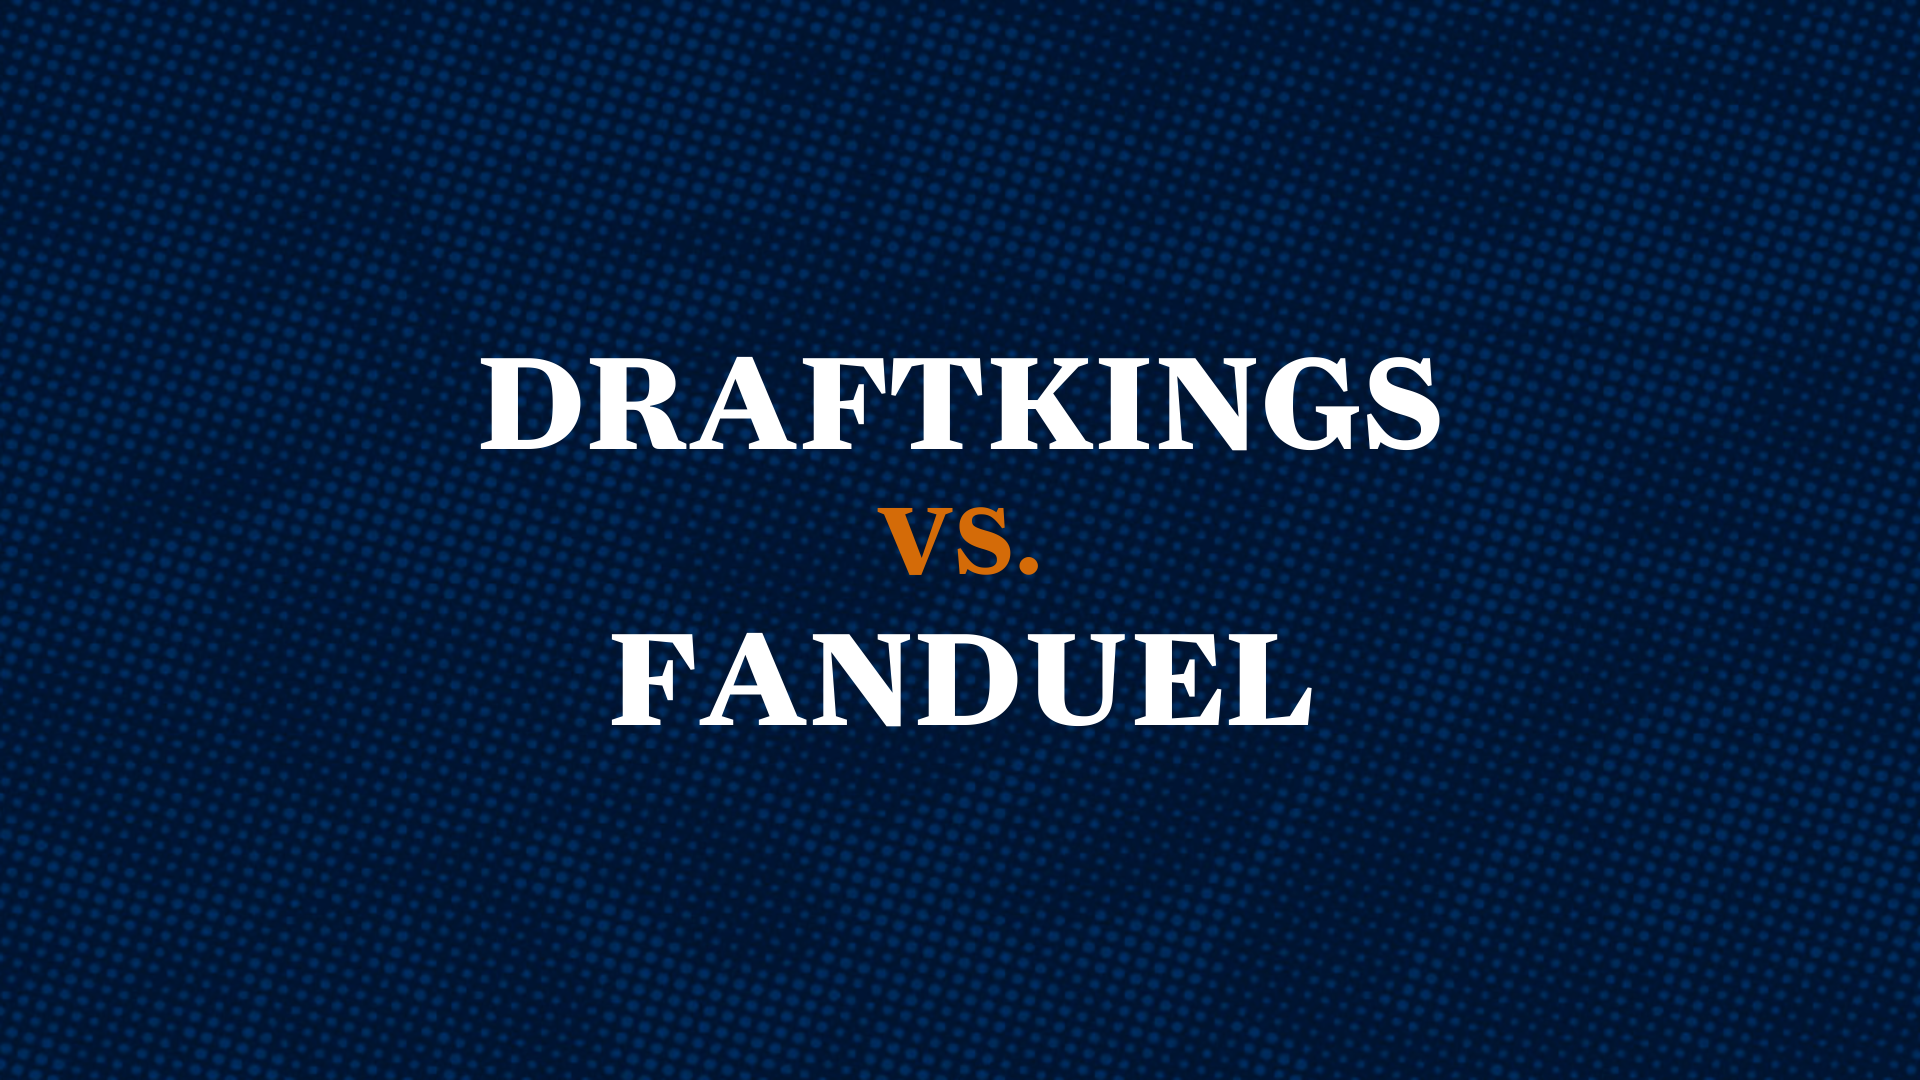 DraftKings & FanDuel Promo Code For Monday Night Football